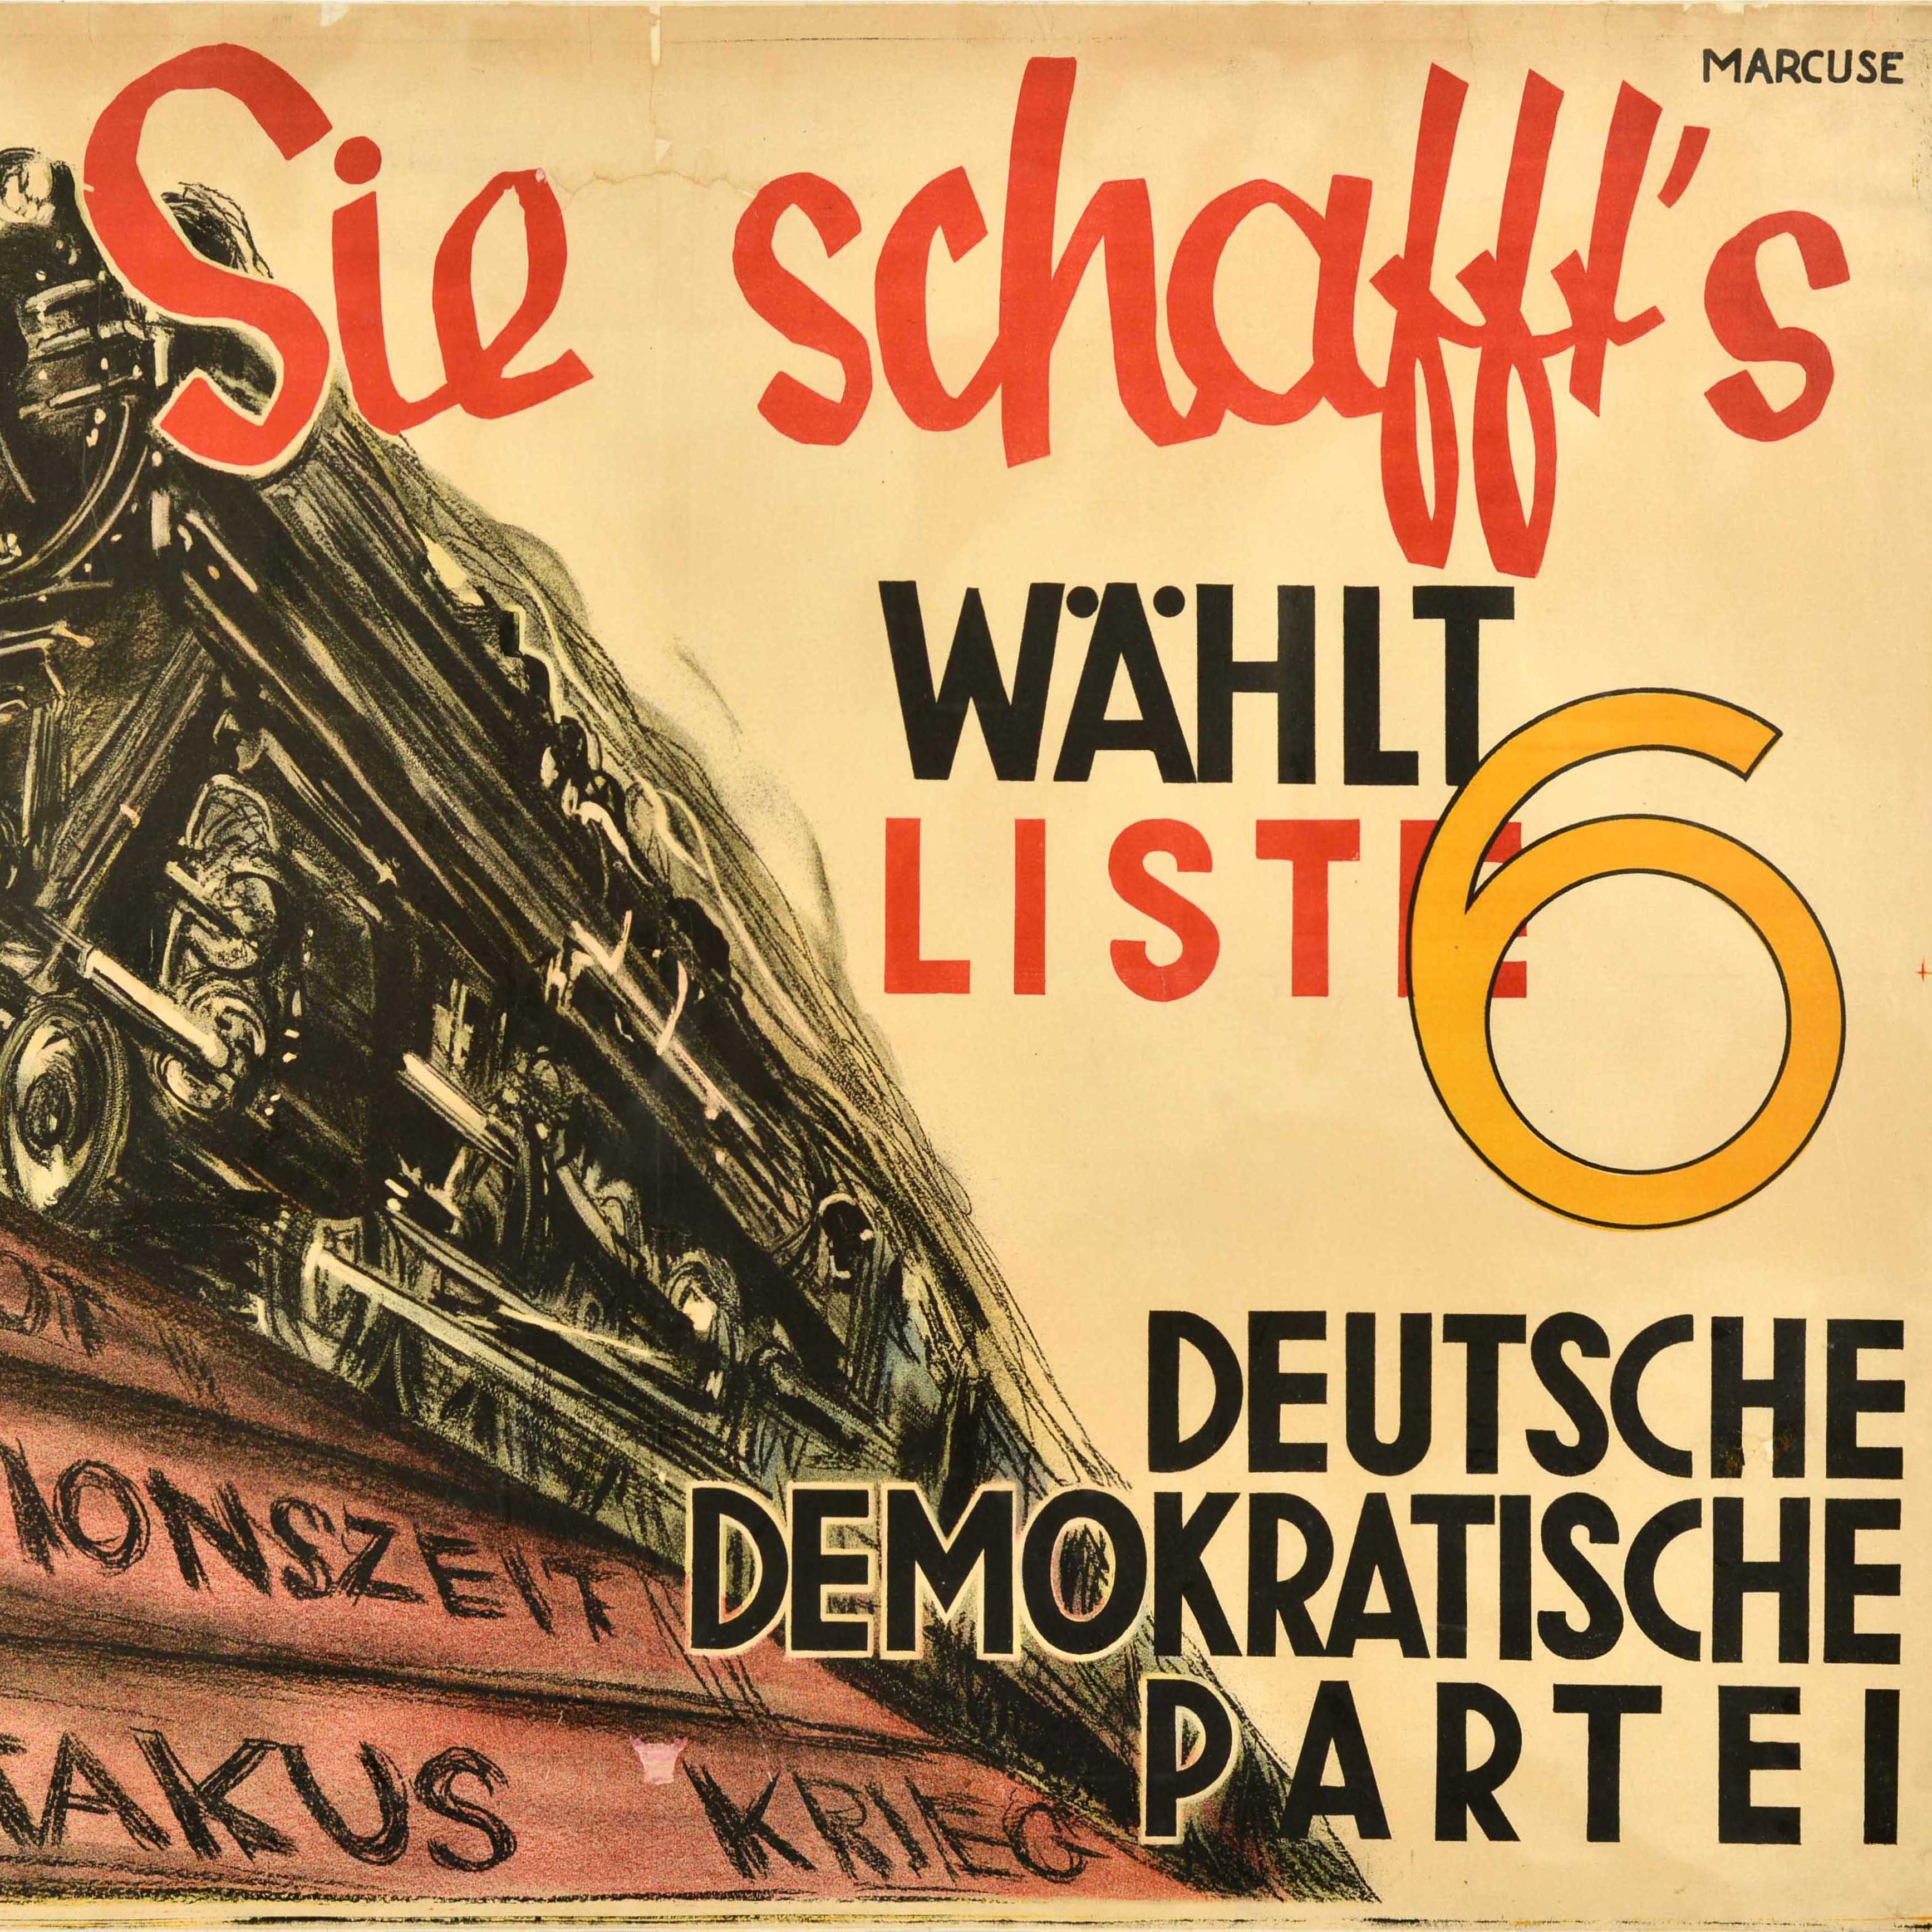 Original Antique Propaganda Election Poster German Democratic Party Train List 6 - Orange Print by Unknown